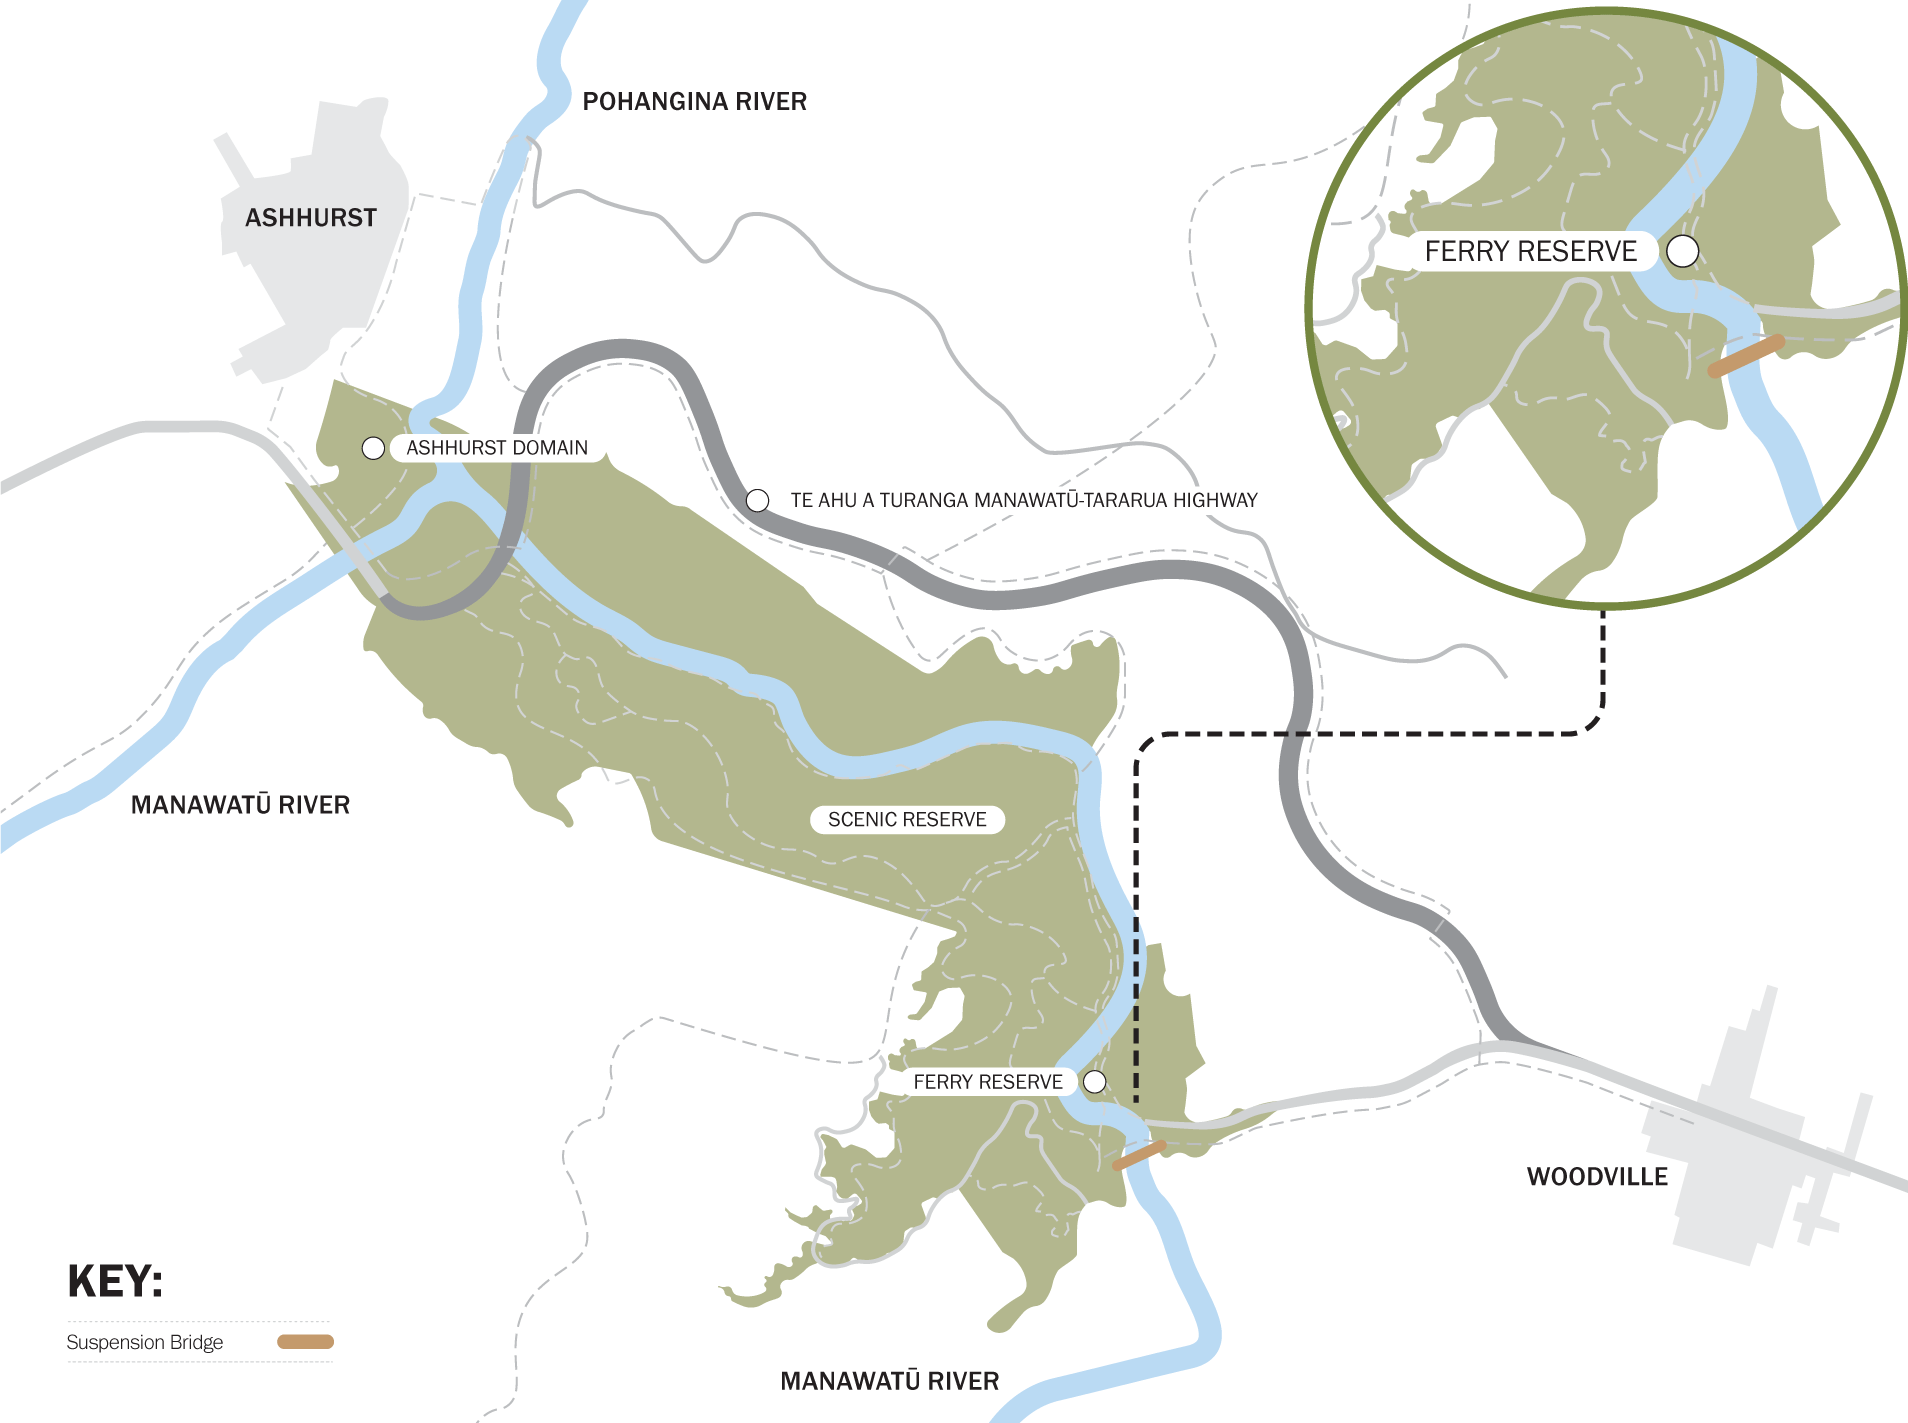 Map of proposed suspension bridge project area